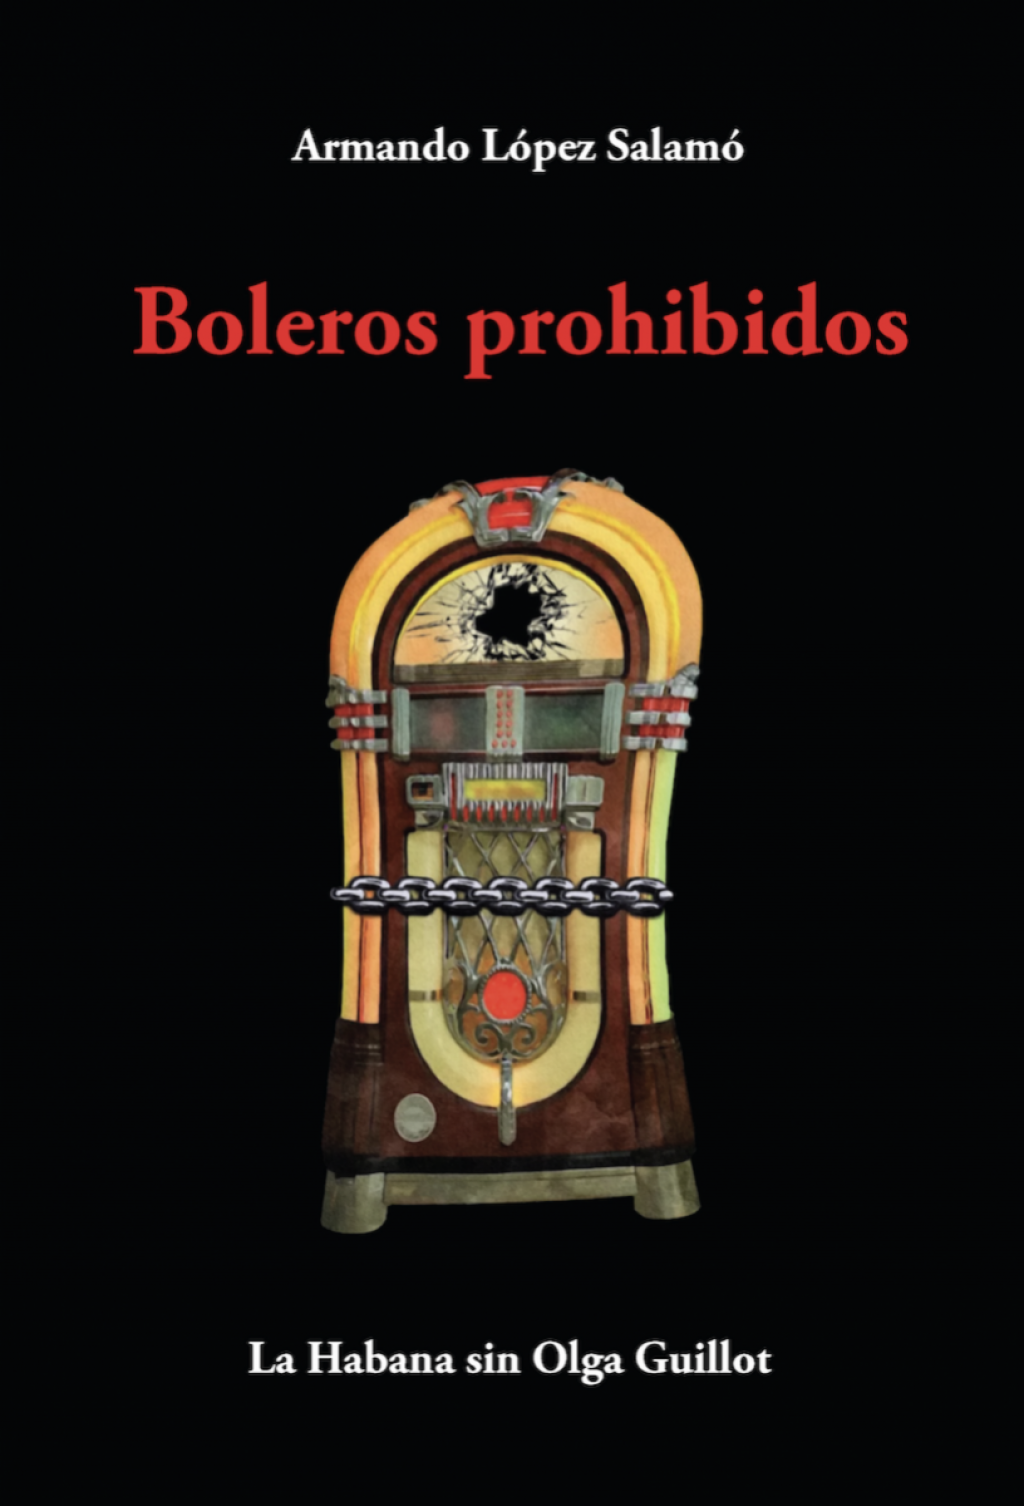 Armando López presenta: “Boleros prohibidos. La Habana sin Olga Guillot”, un viaje musical a Cuba 